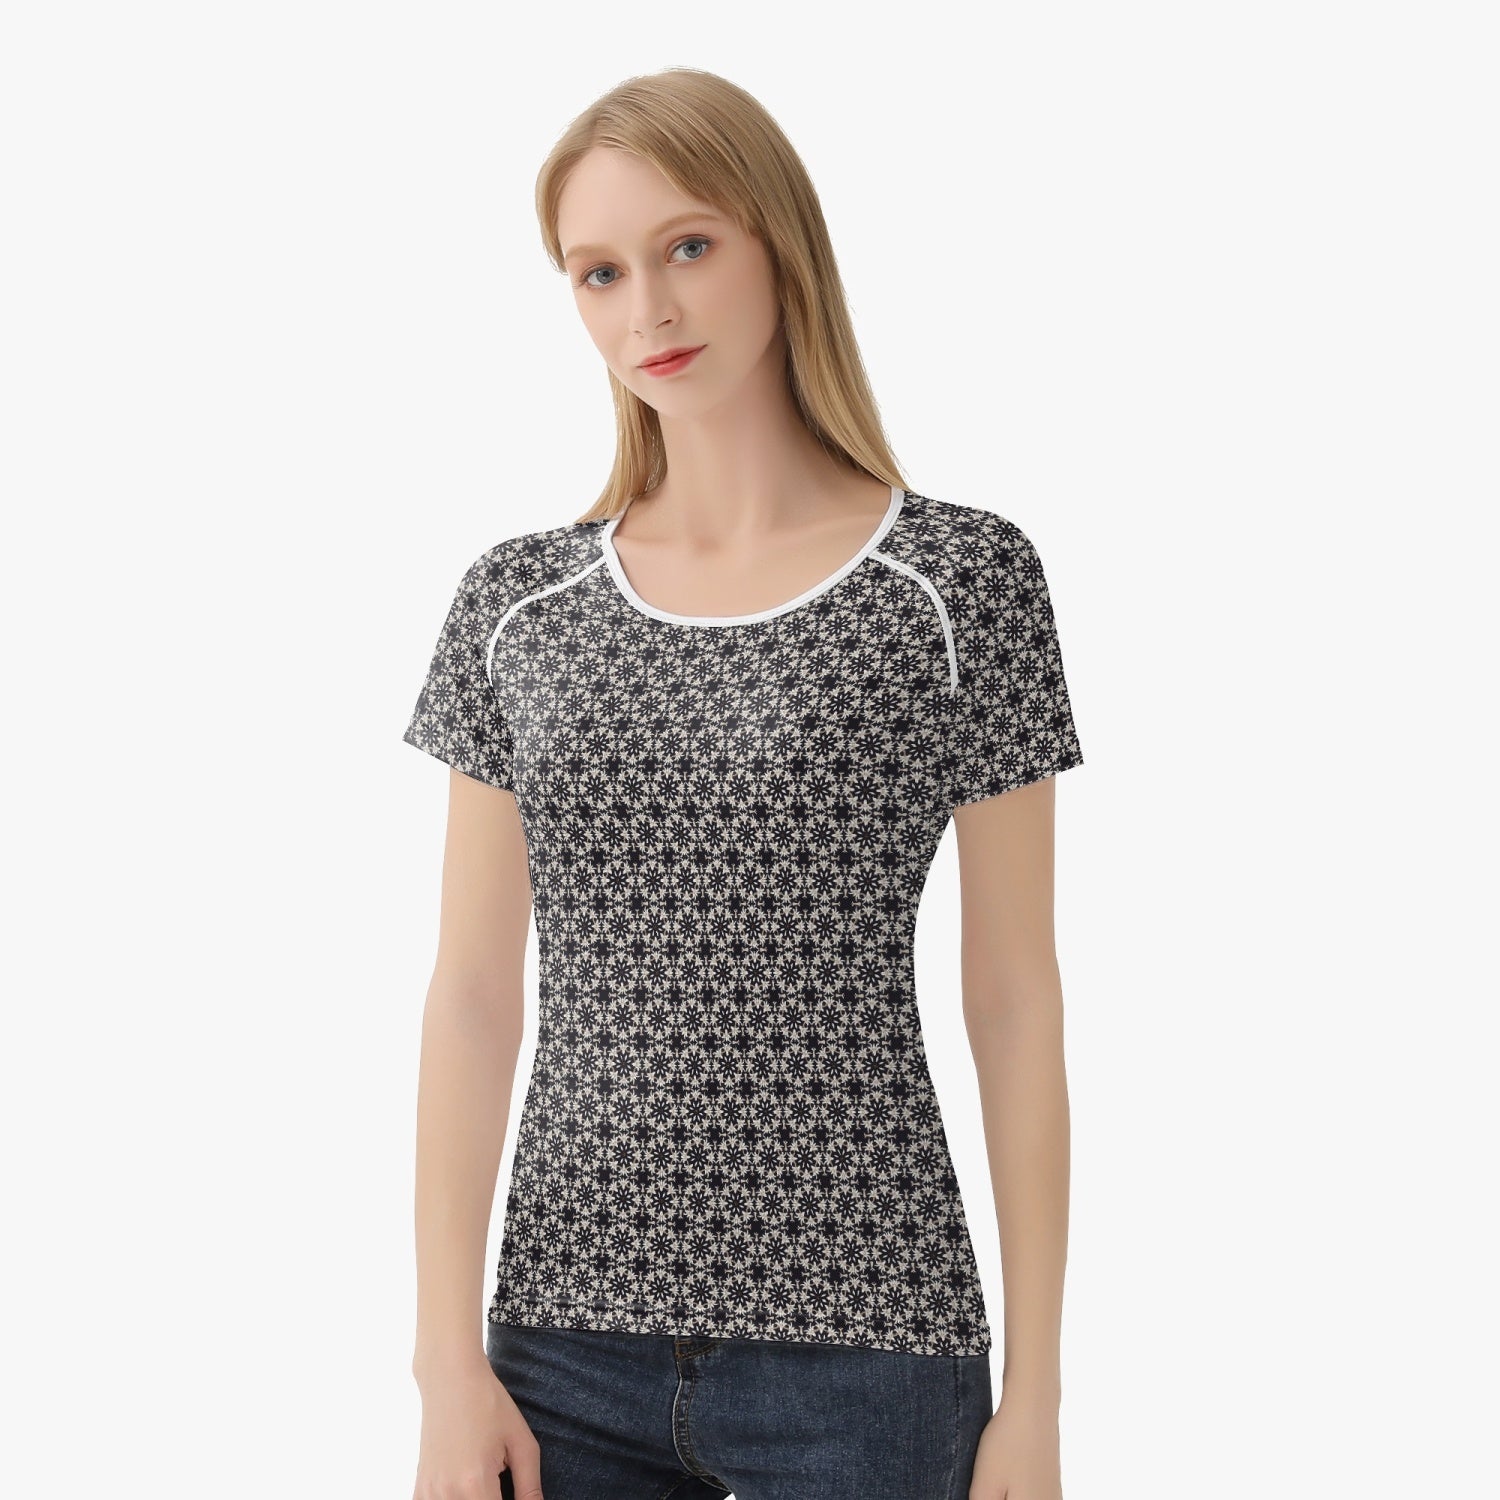 White lilie on Black,Handmade  Women T-shirt, Yoga top, by Sensus Studio Design